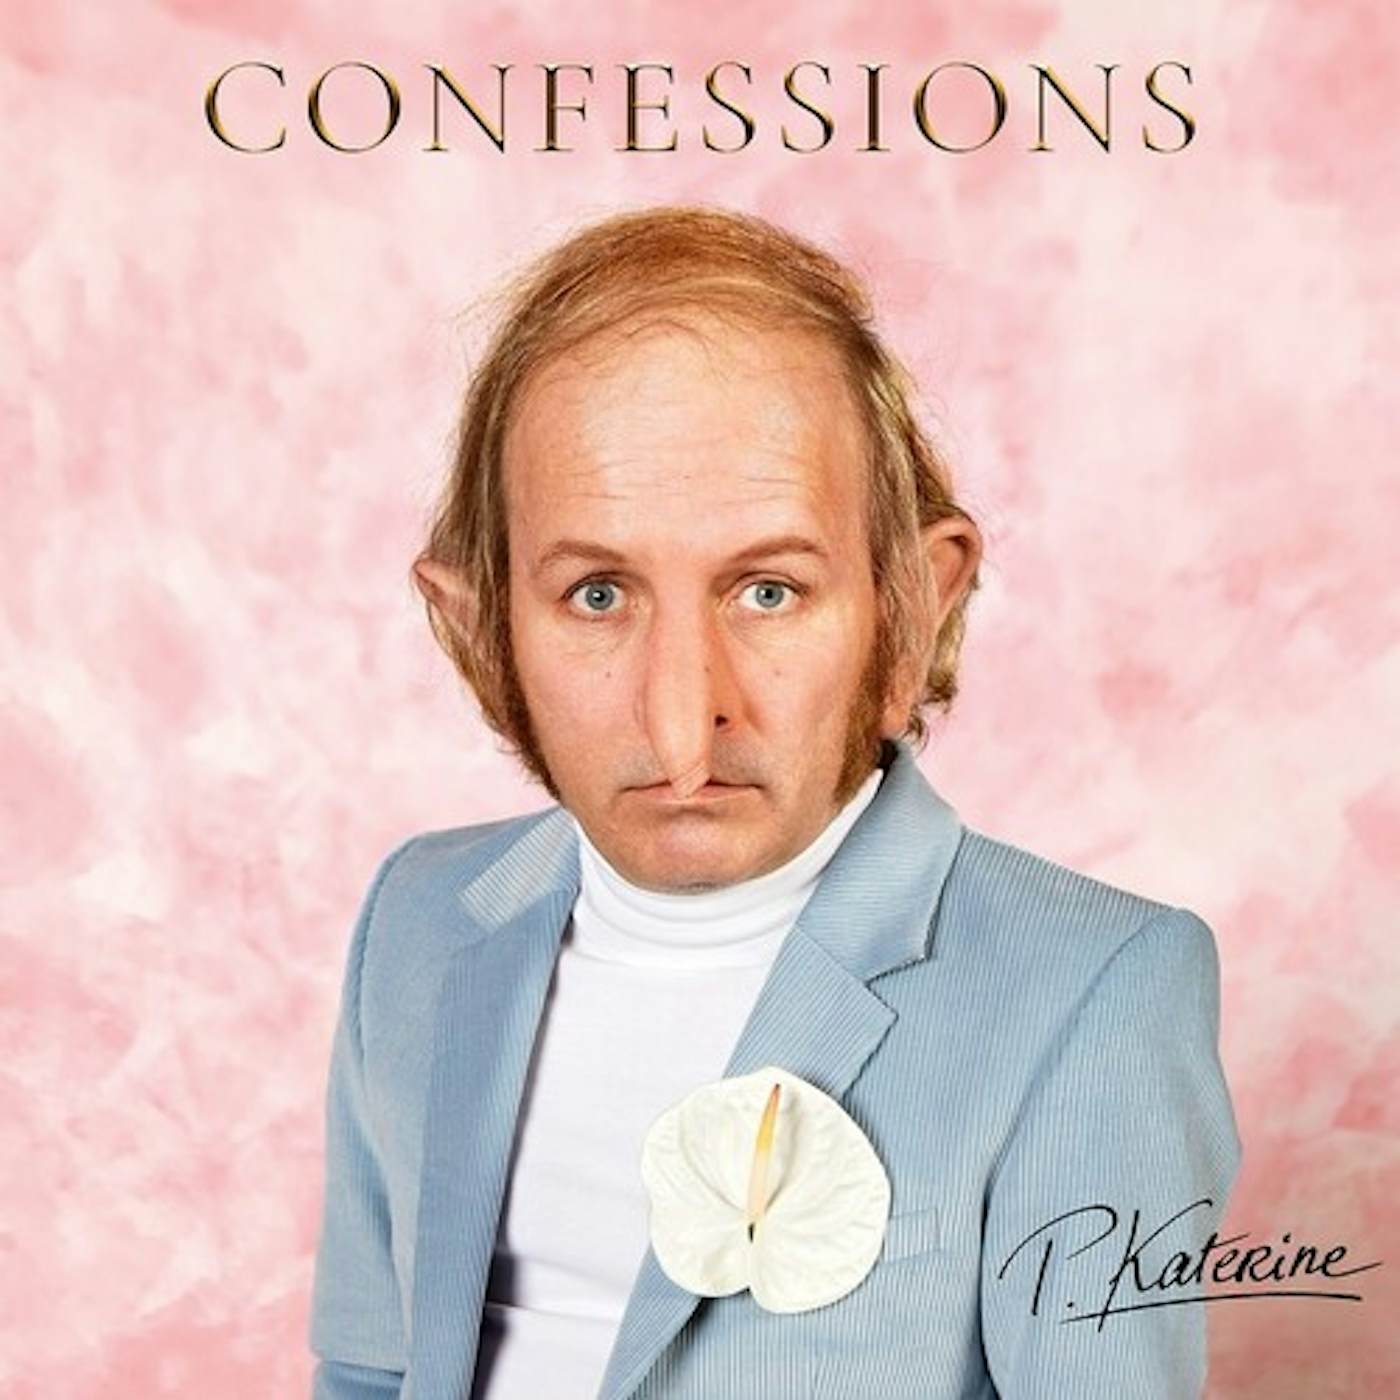 Philippe Katerine Confessions Vinyl Record